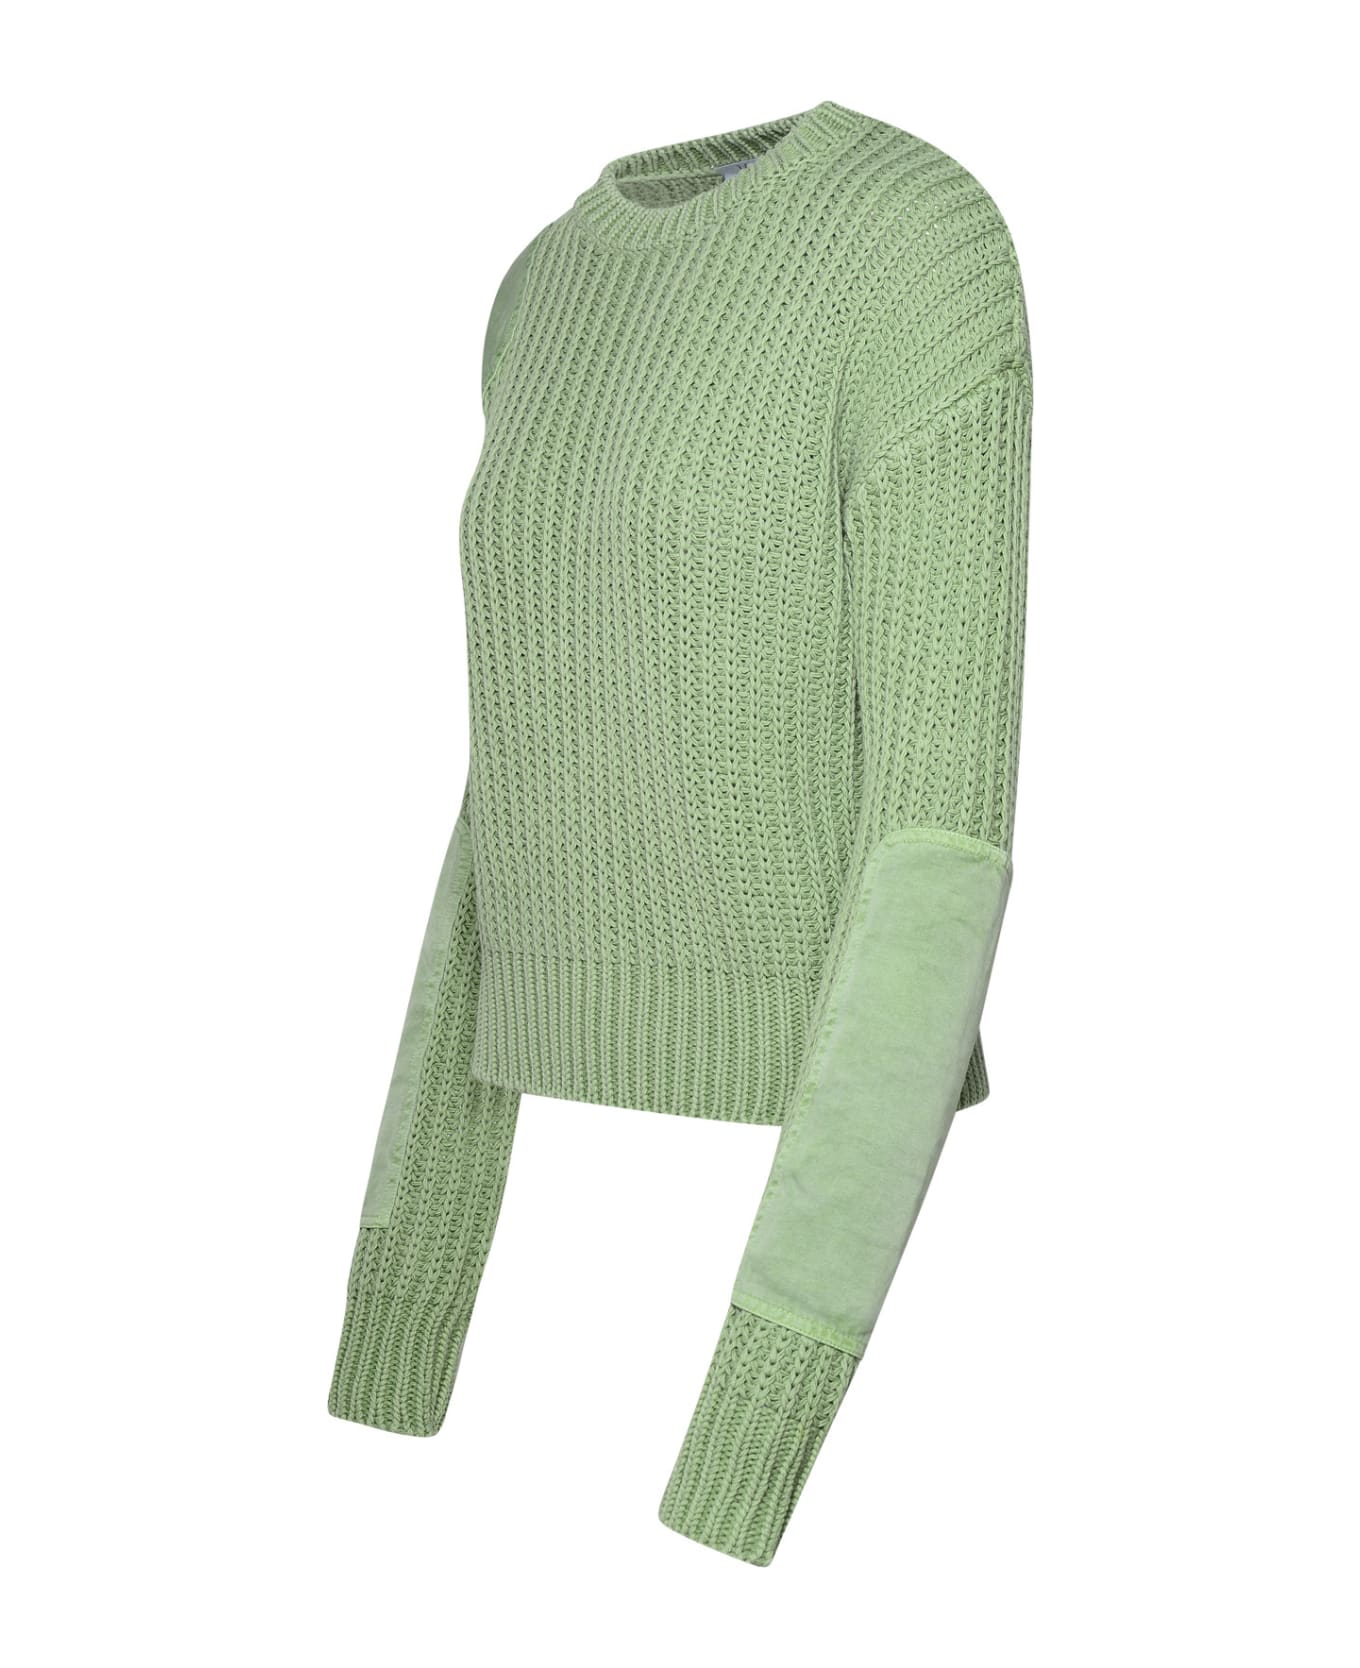 Max Mara 'abisso1234' Sage Green Cotton Sweater - Green ニットウェア